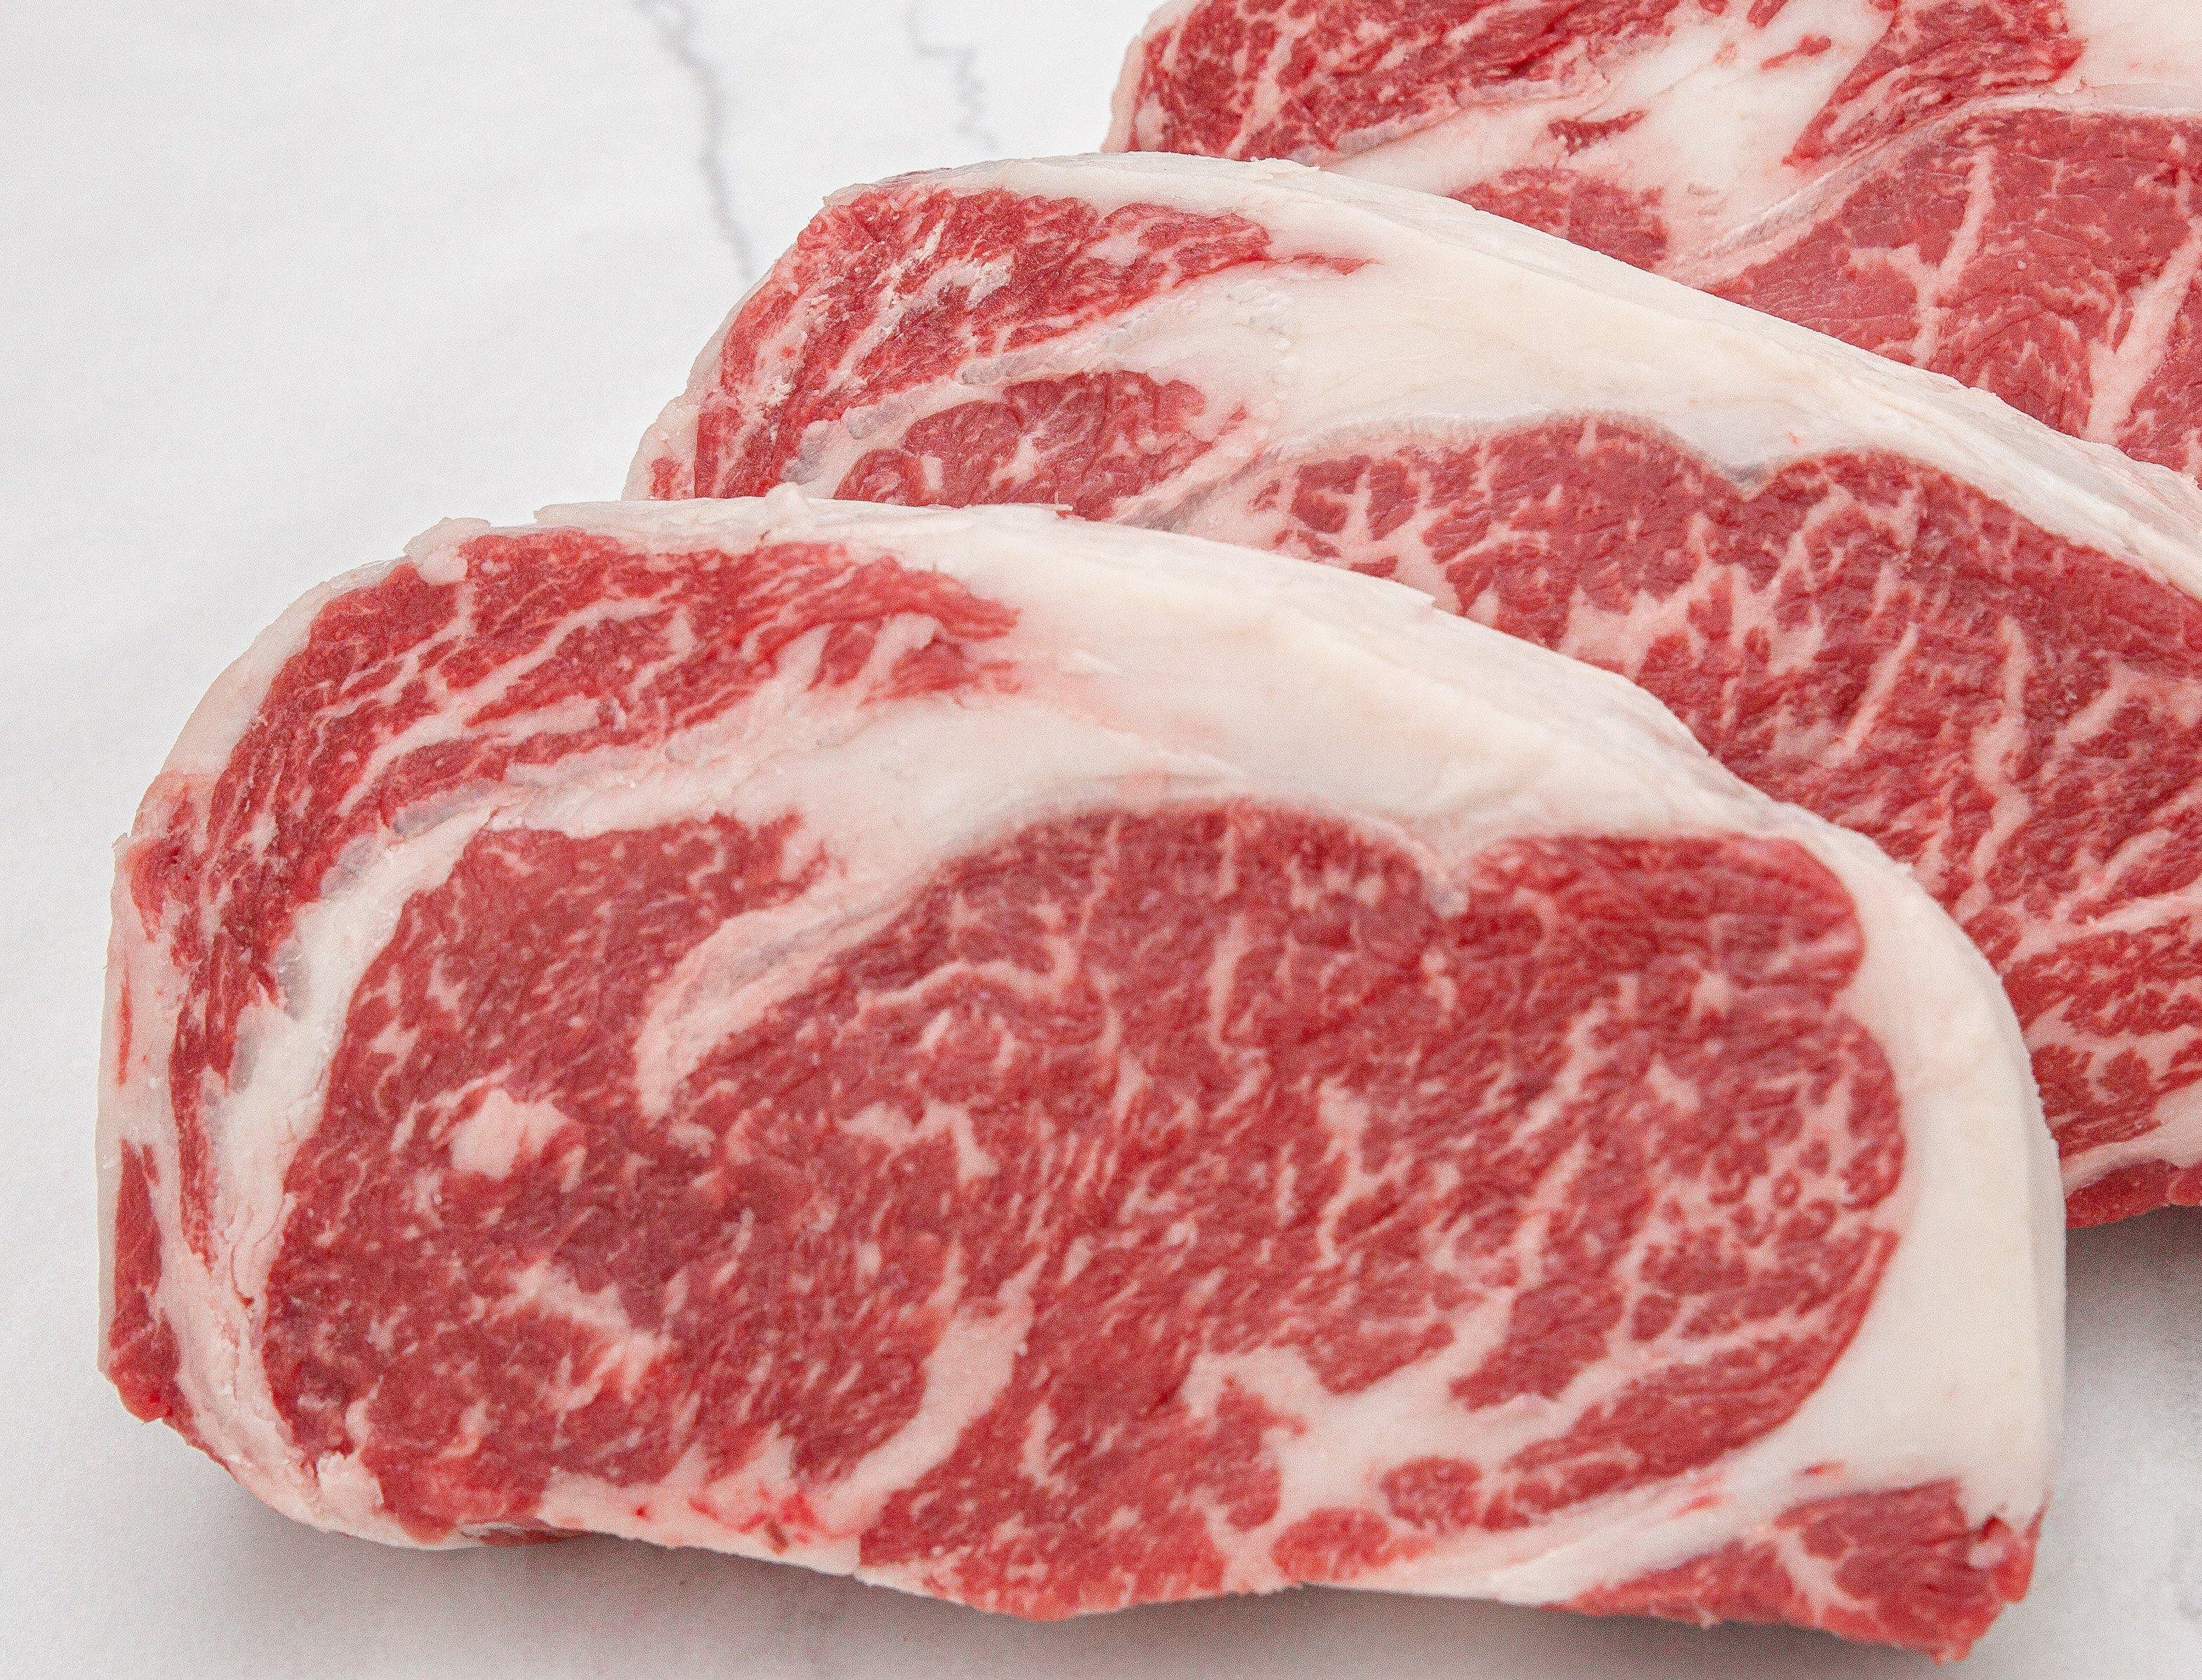  USDA Prime Boneless Ribeye Steaks, 6 count, 12 oz each